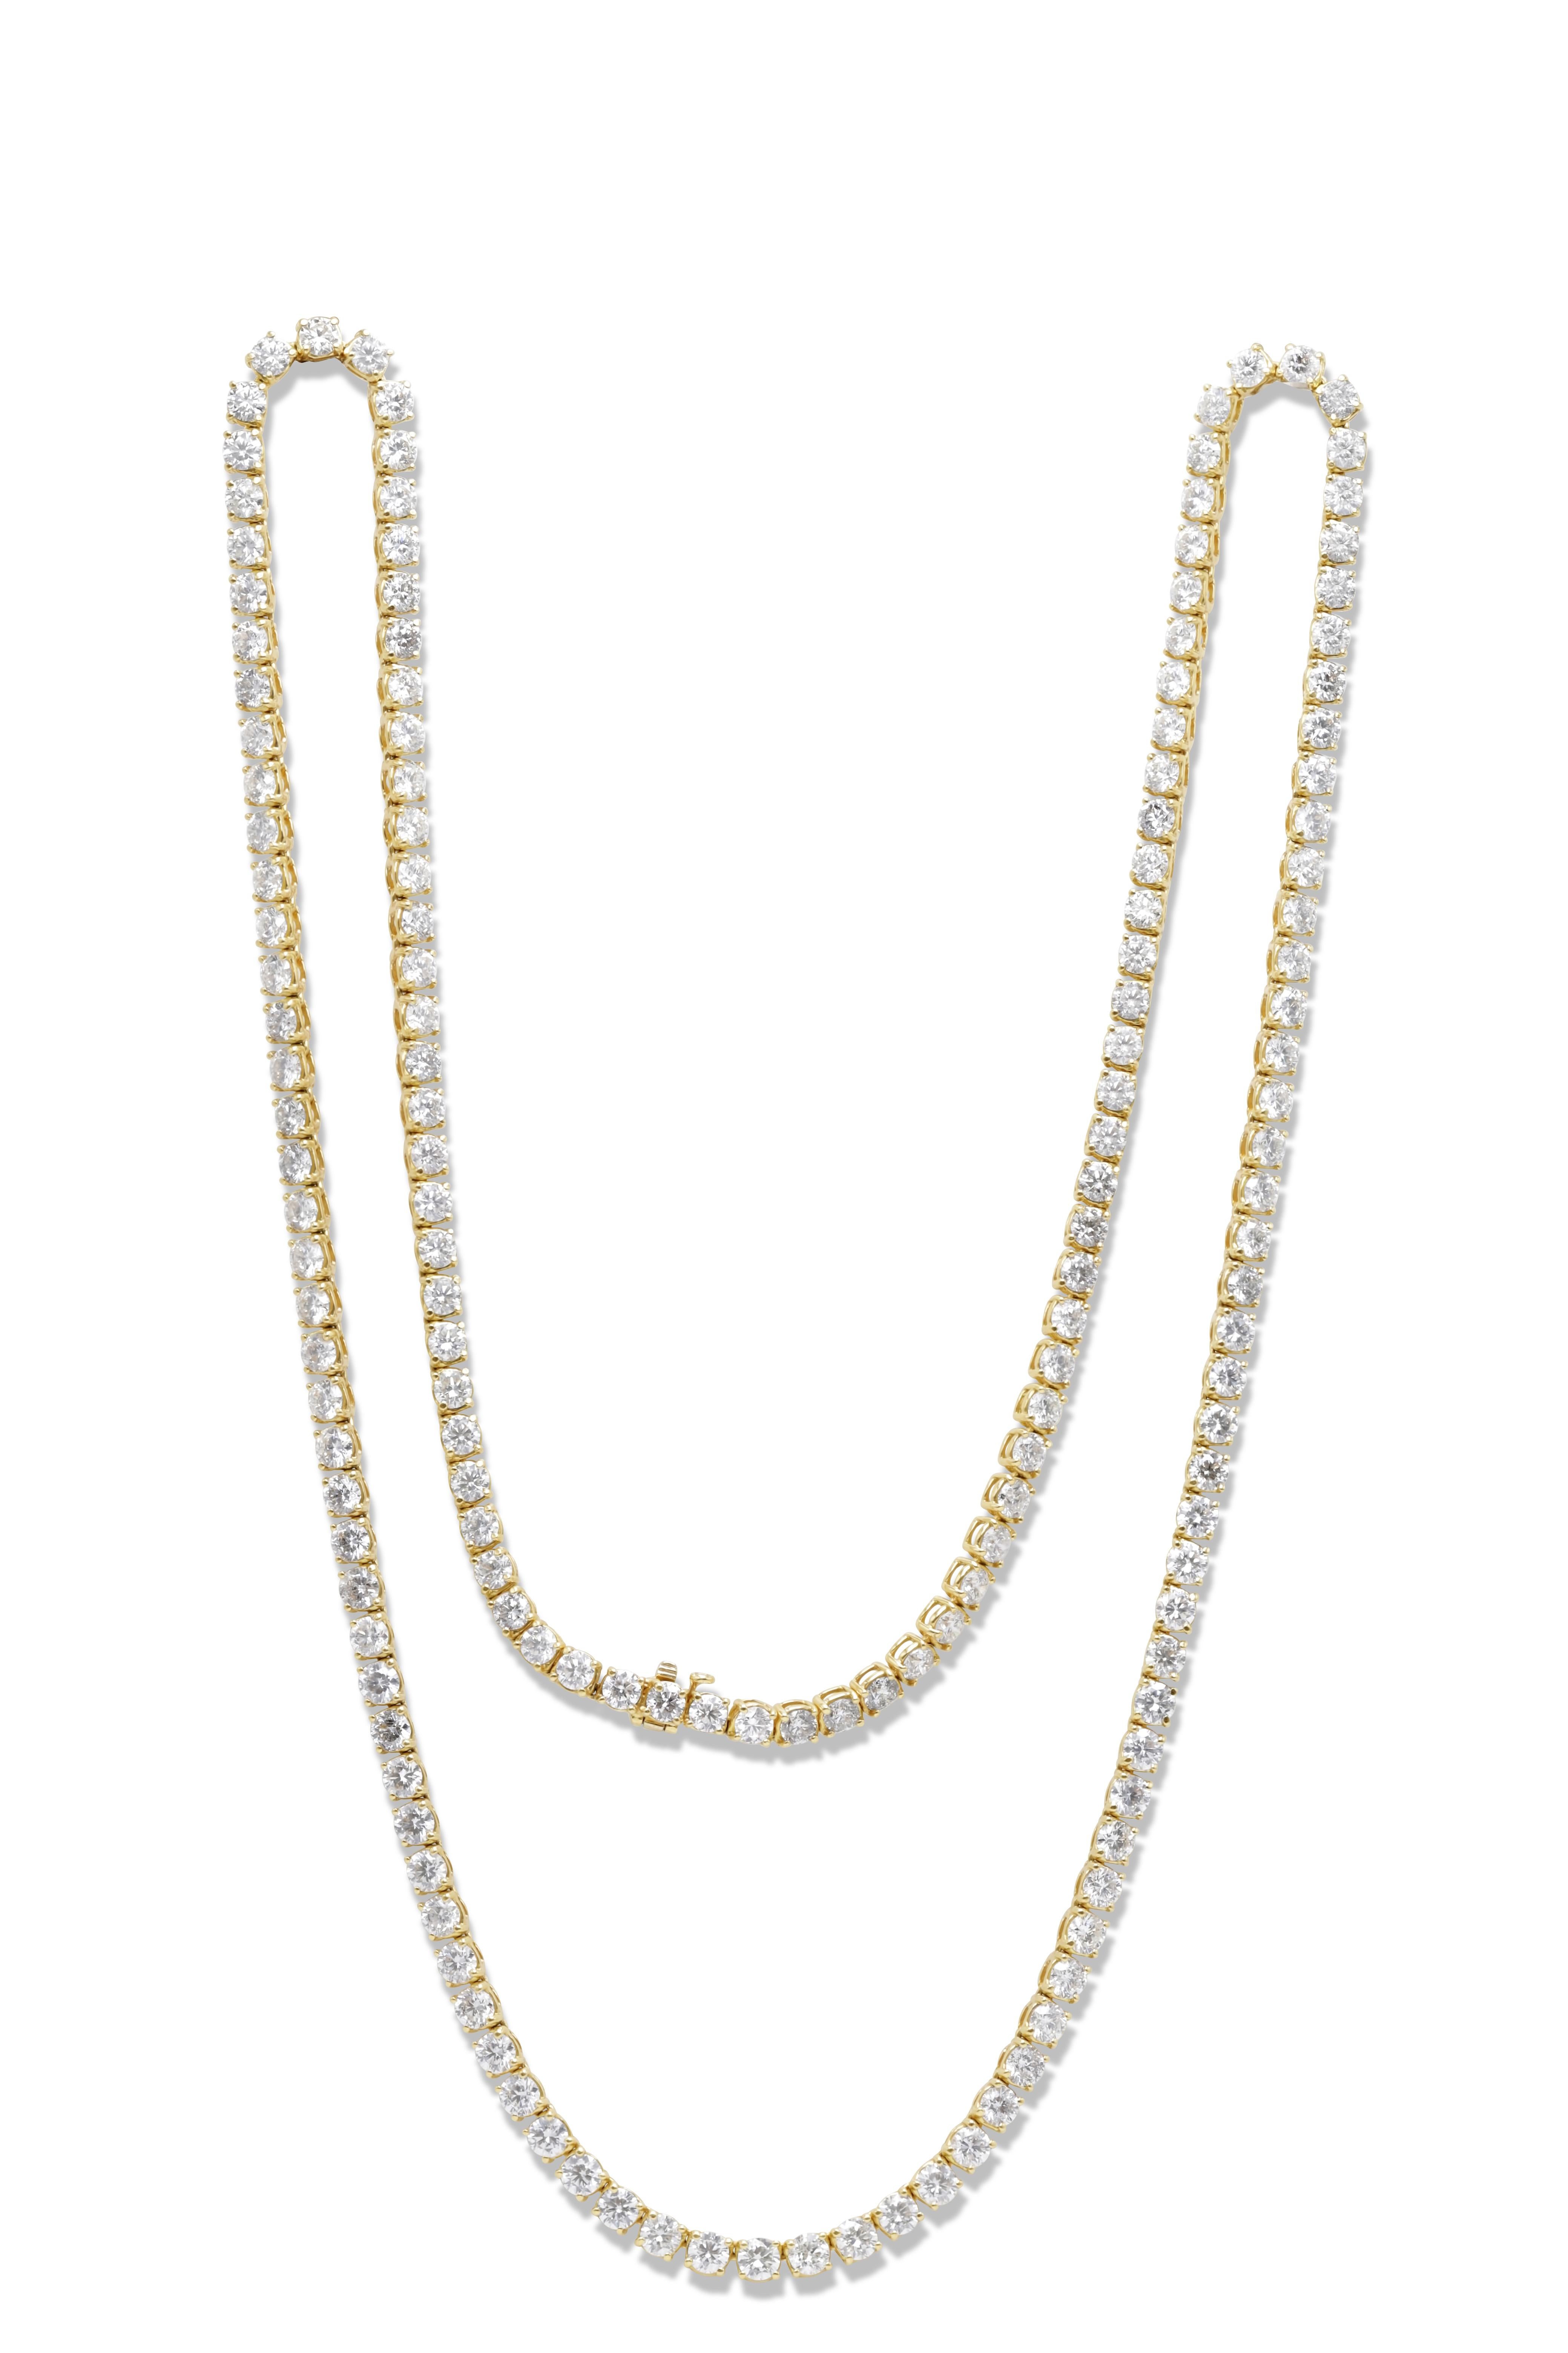 Round Cut Diana M.Custom 50.00 Cts Diamond Opera Length Riviera 18k Yellow Gold Necklace For Sale